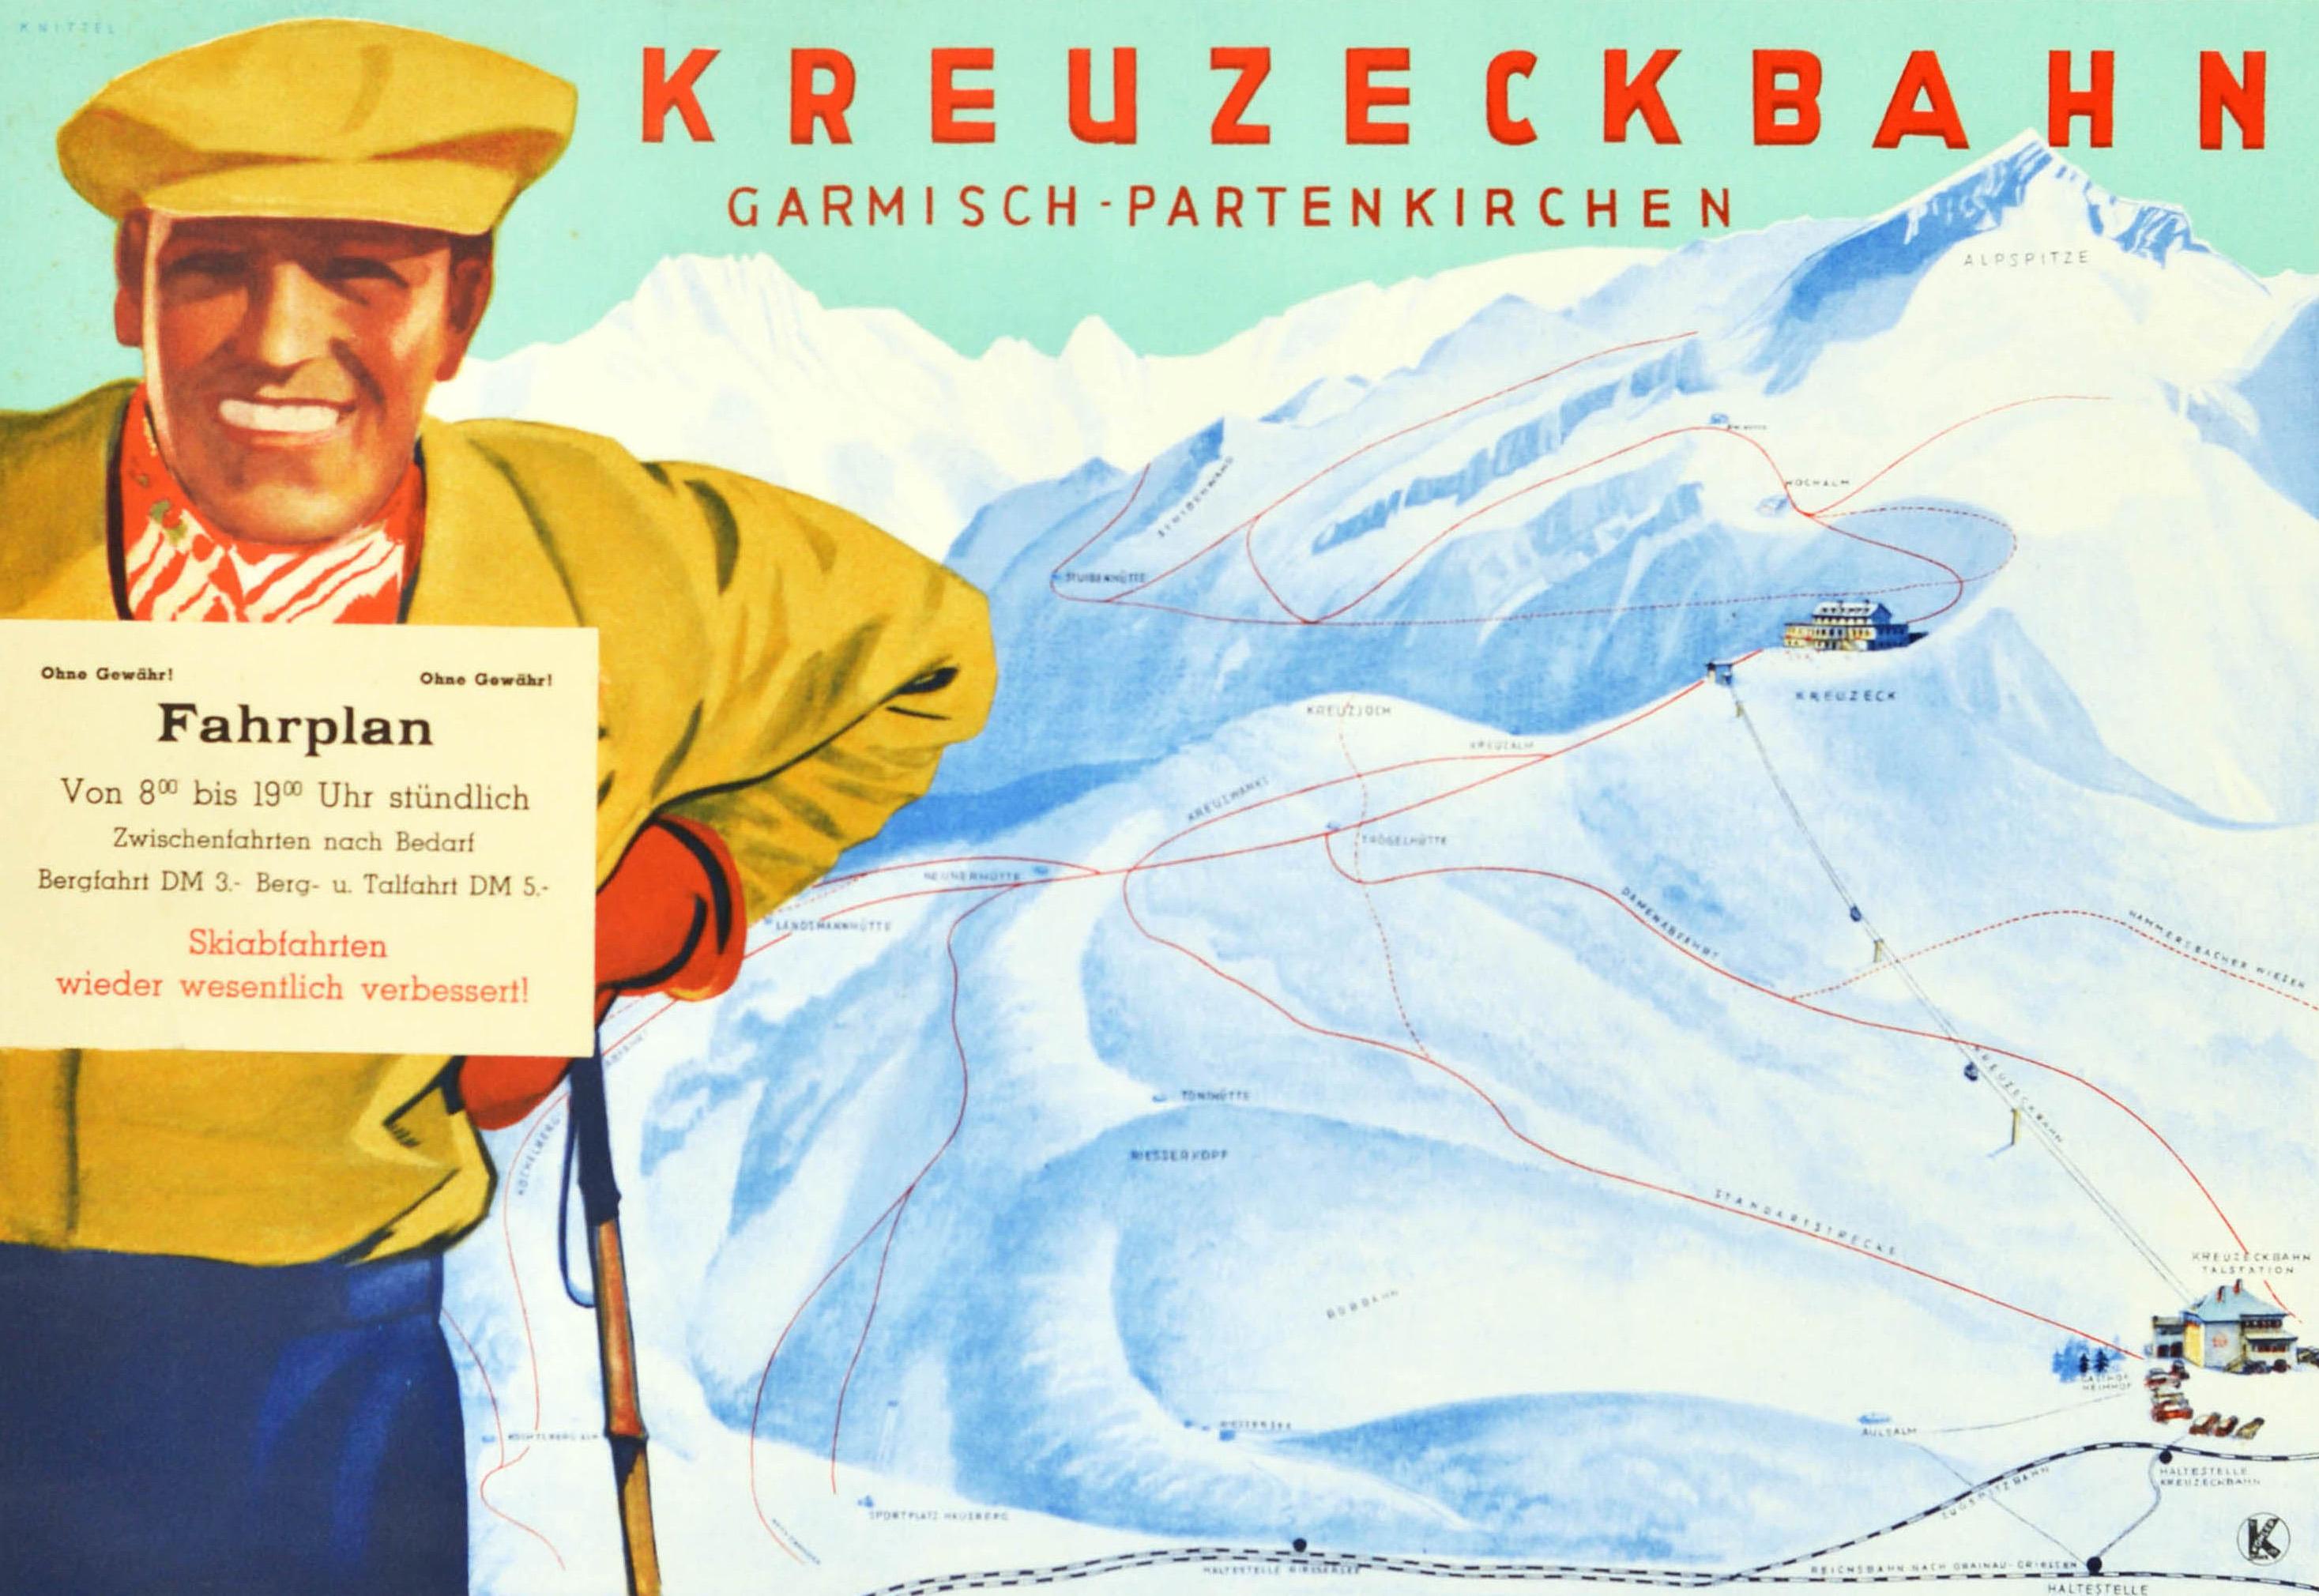 Original Vintage Poster Kreuzeck Bahn Garmisch Partenkirchen Skiing Cable Car - Print by Unknown